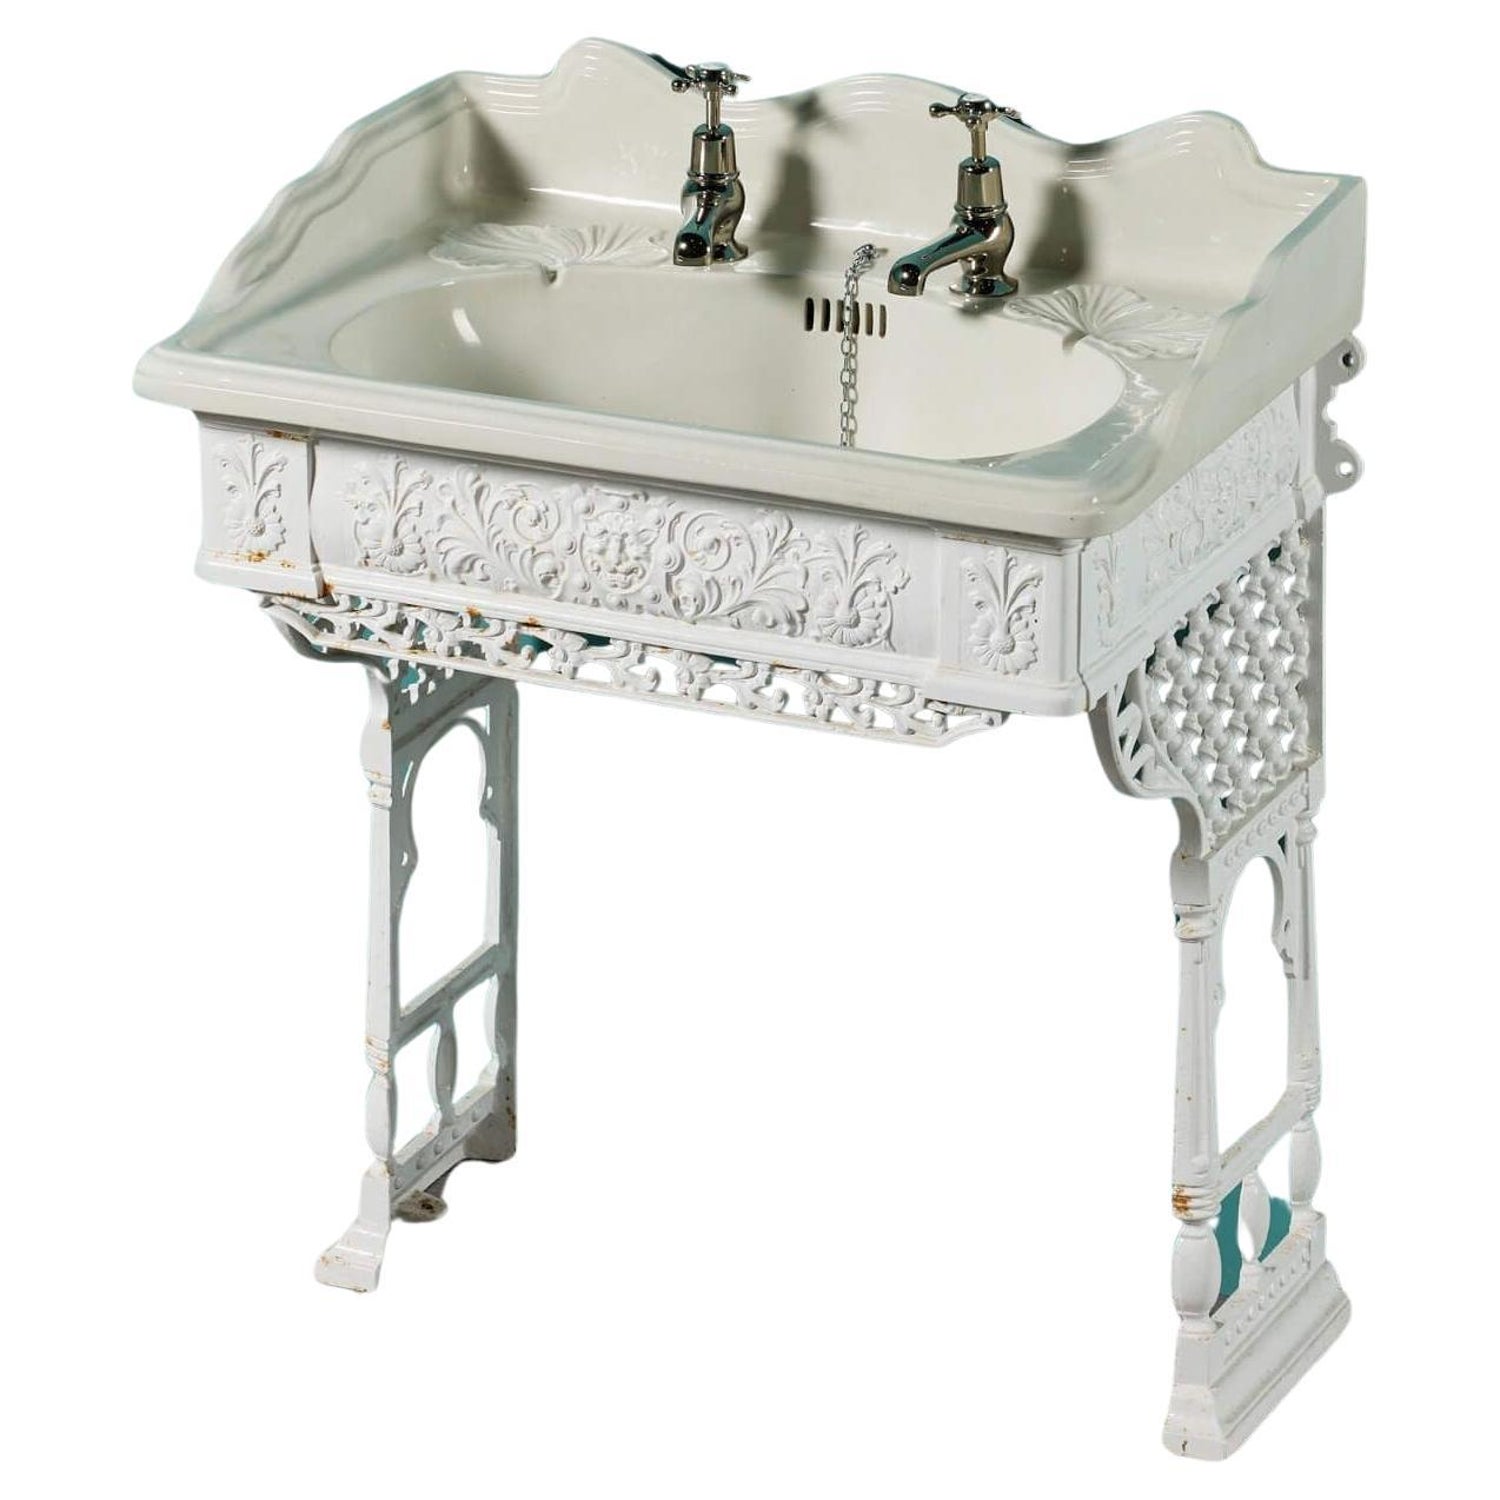 https://a.1stdibscdn.com/antique-porcelain-sink-on-cast-iron-stand-for-sale/f_20963/f_369313921699063991230/f_36931392_1699063991578_bg_processed.jpg?width=1500